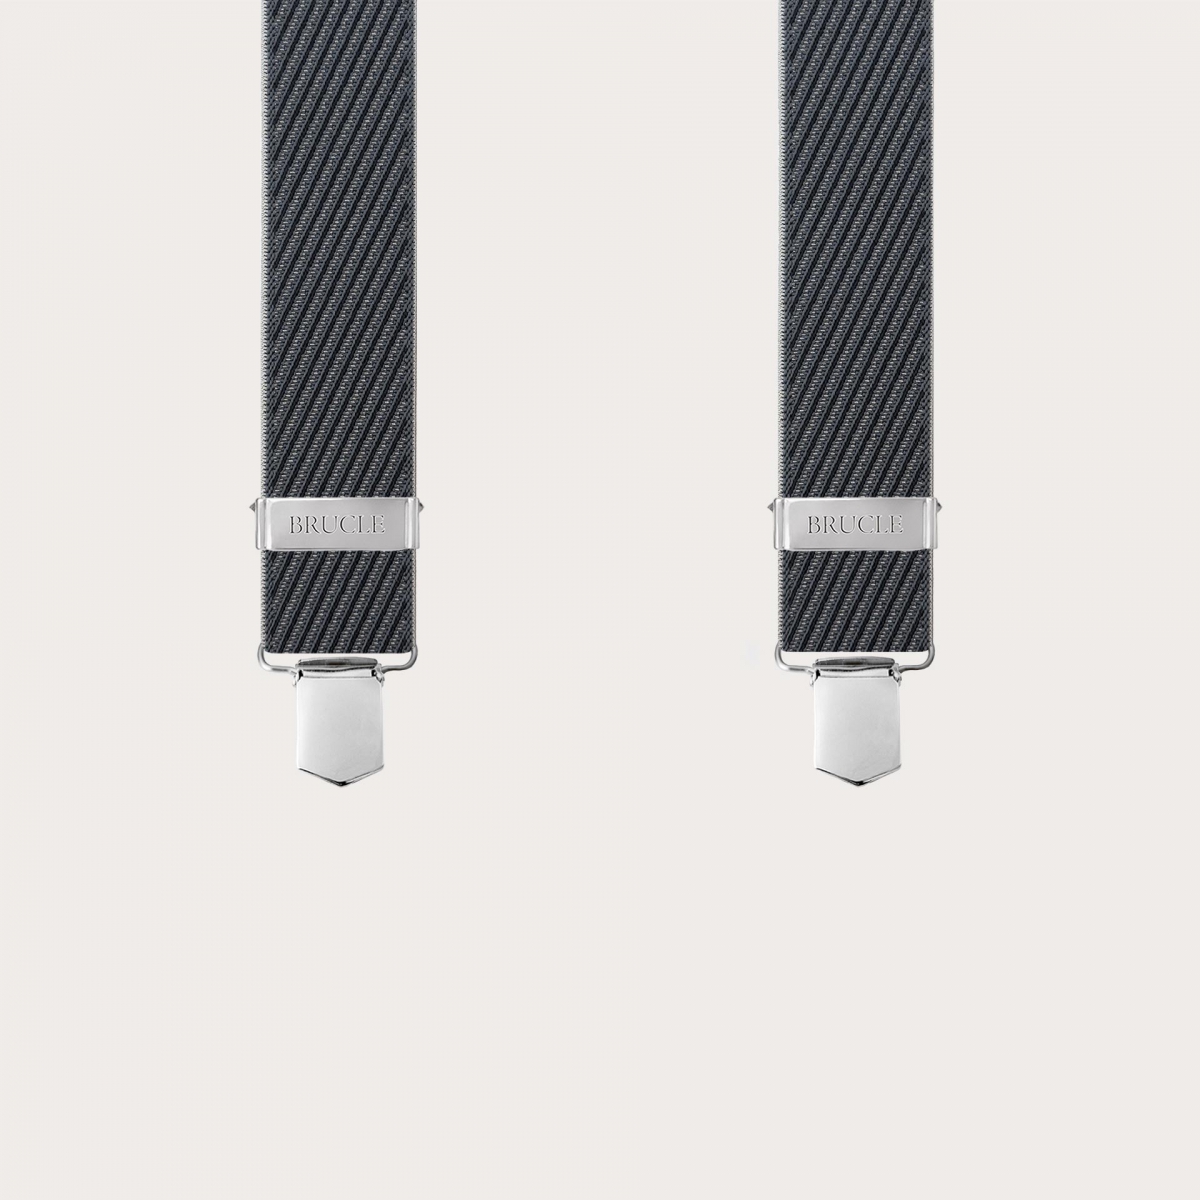 Tirantes para hombre negros en X con rayas diagonales, solo con clips